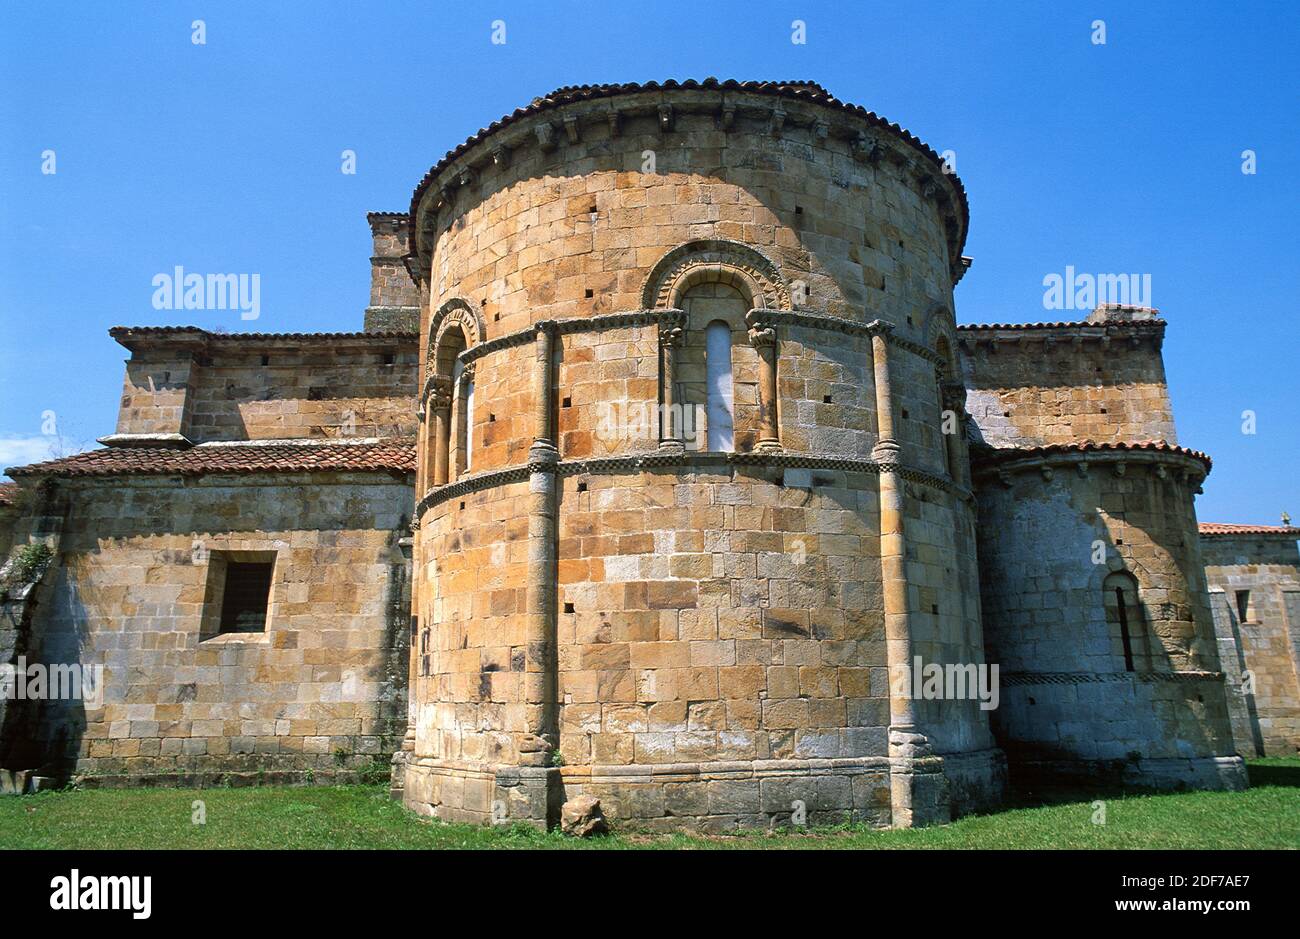 Colegiata de Santa Cruz de Castañeda, romanisque 12th century. Socobio, Cantabria, Spain. Stock Photo